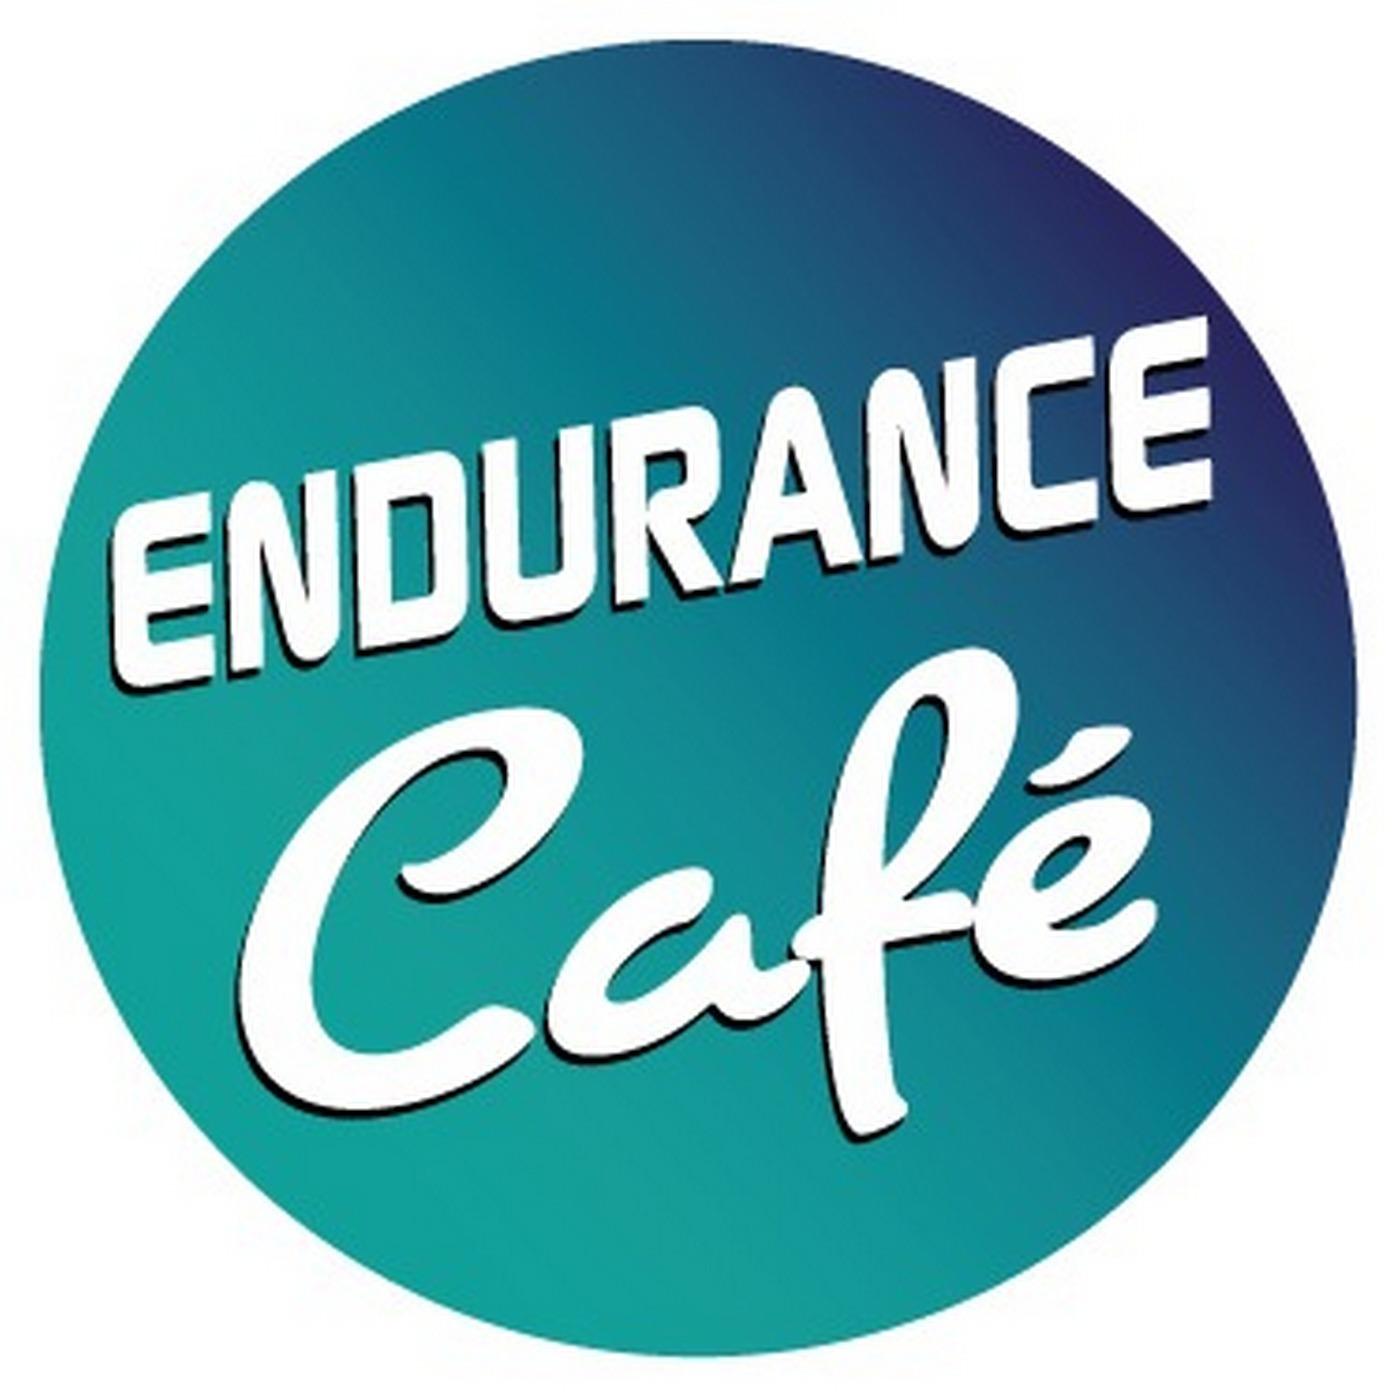 Endurance café